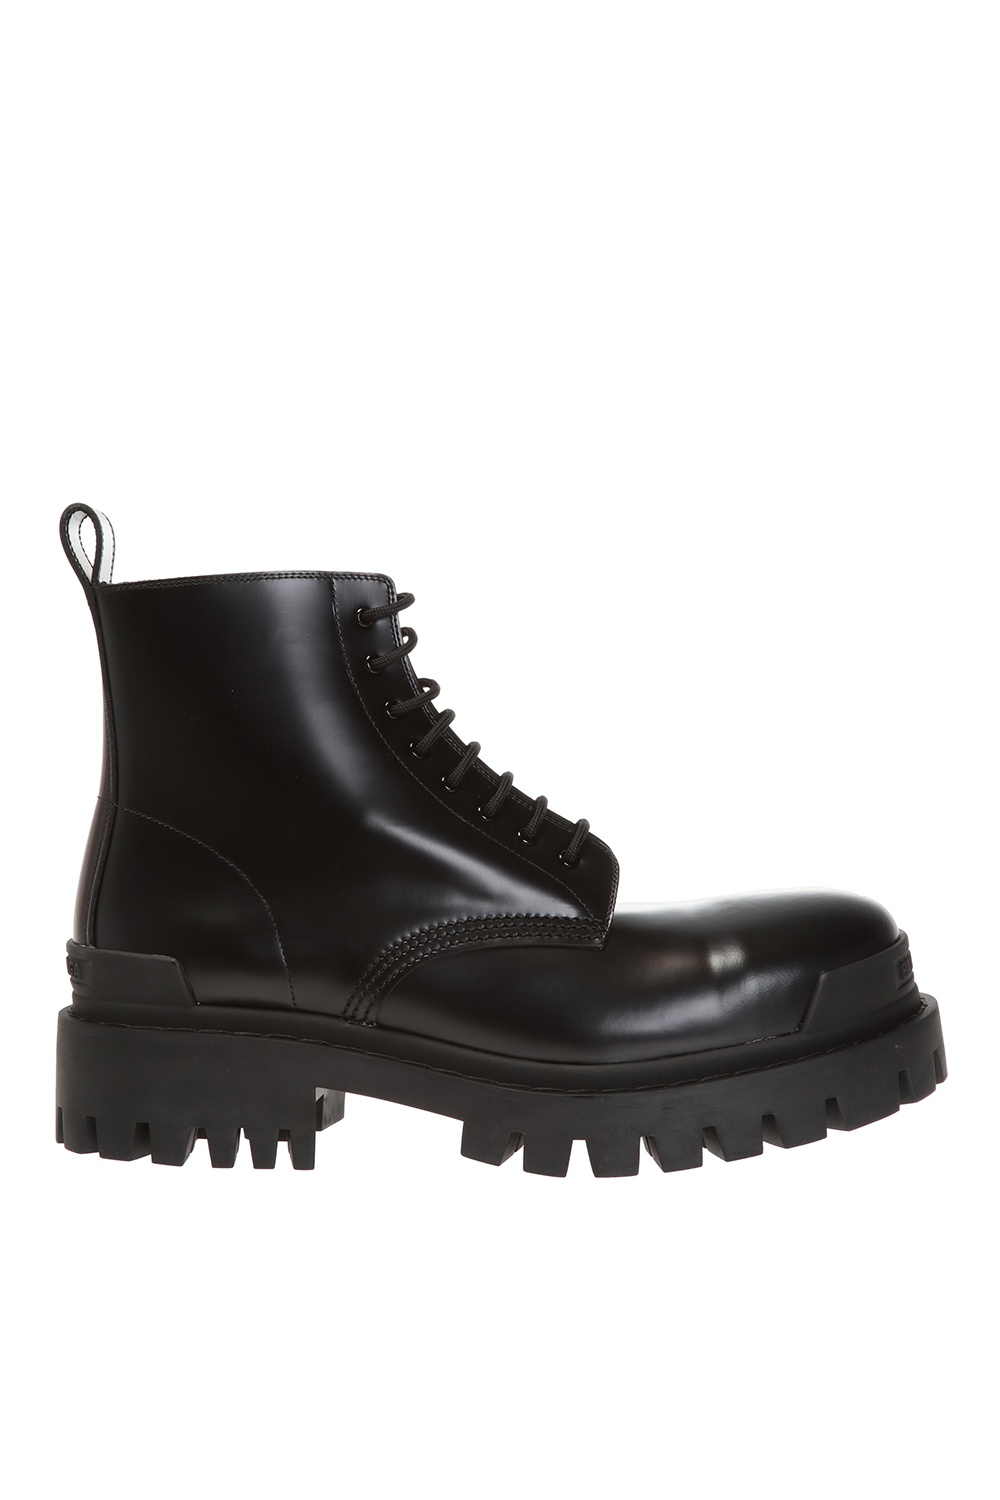 ‘Strike’ leather trapper shoes Balenciaga - Vitkac Australia